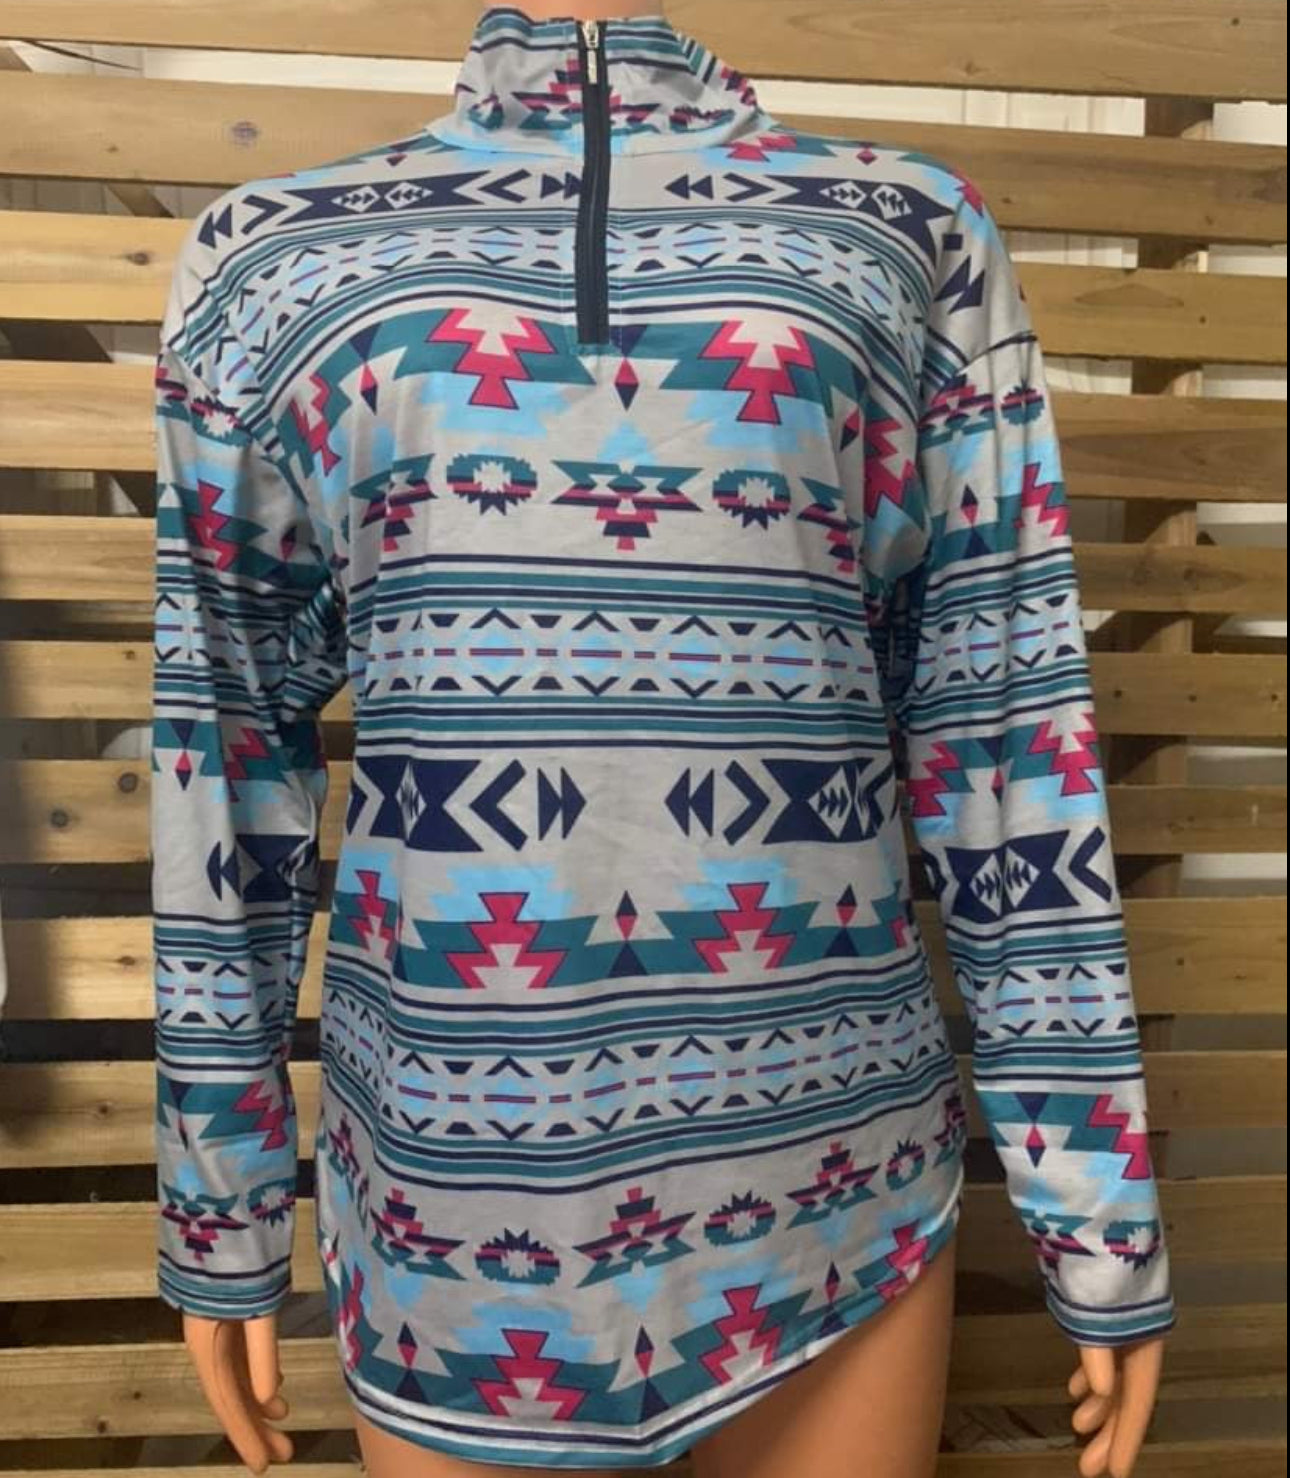 Teal Aztec sweater